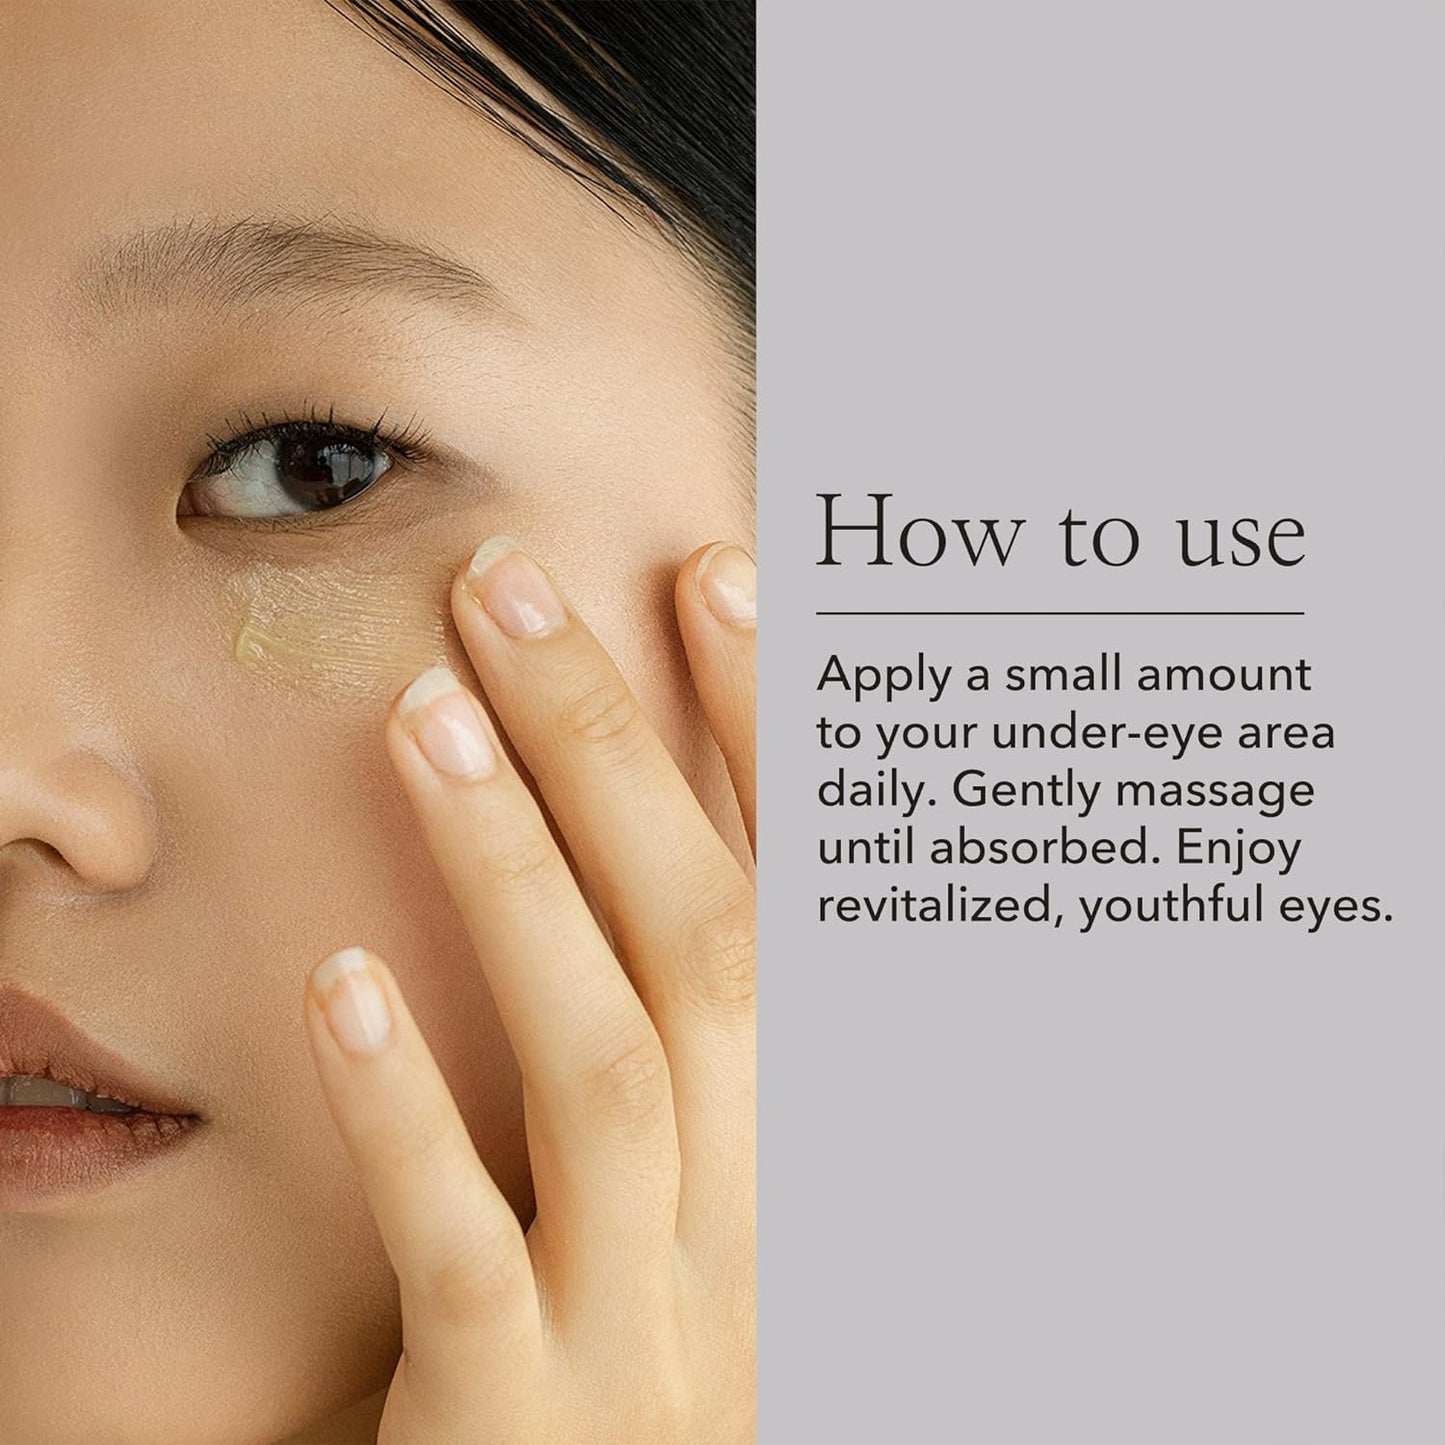 Beauty of Joseon revive eye serum ginseng + retinal